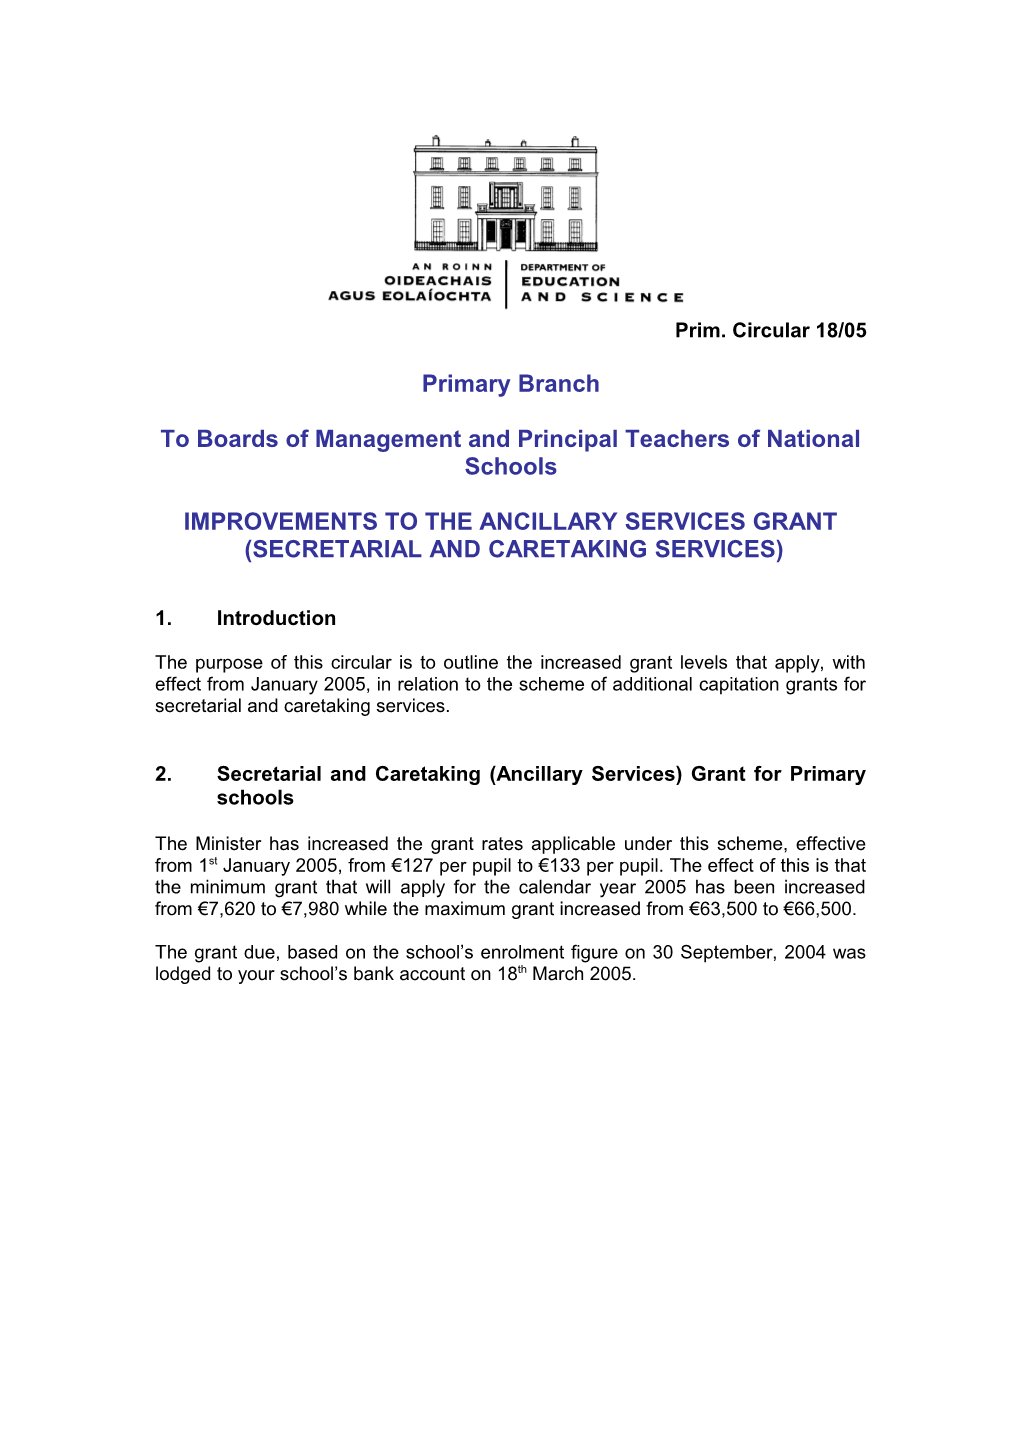 Primary Circular 18/05 - Improvements to the Ancillary Services Grant (Secretarial & Caretaking